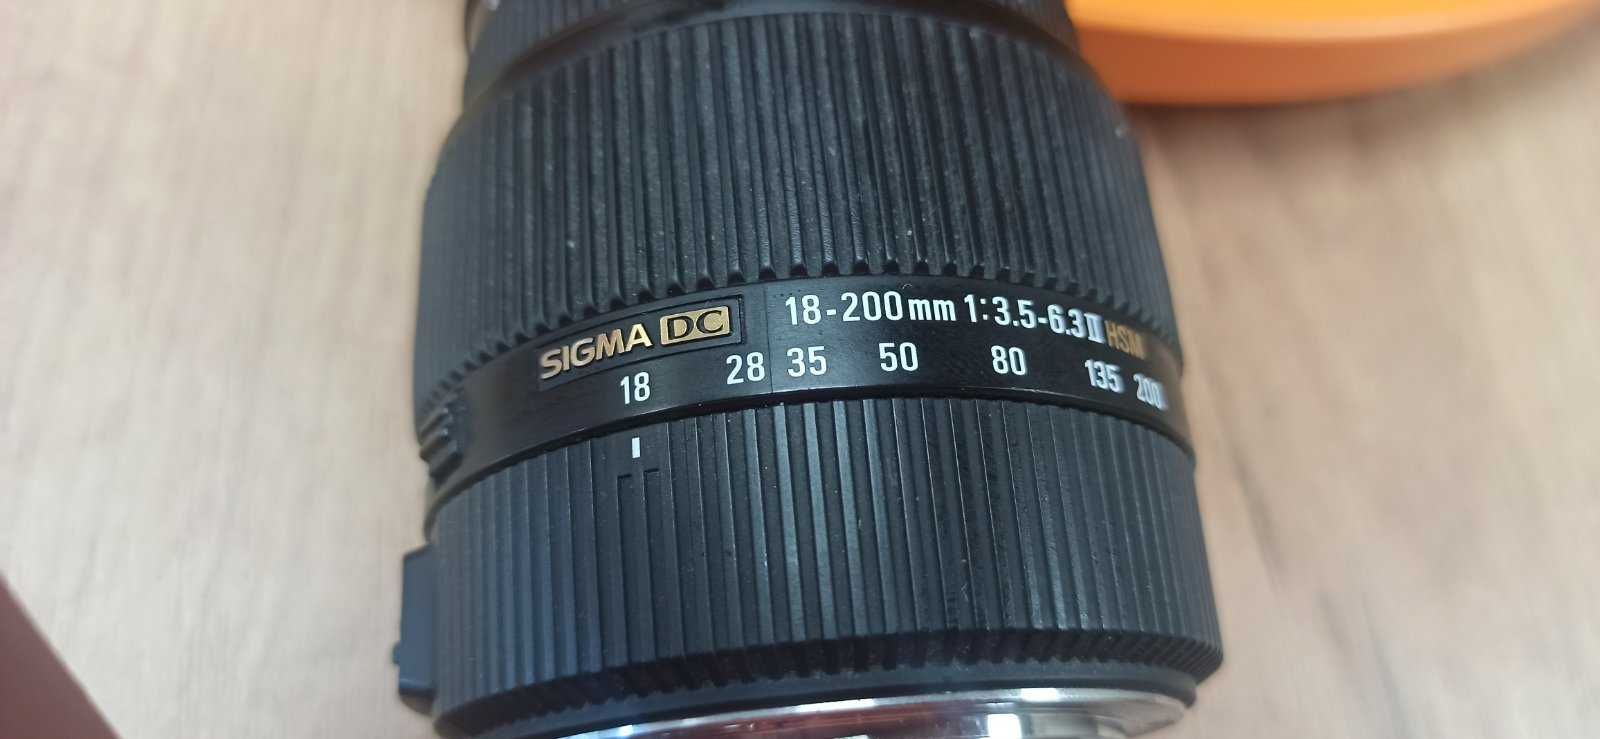 Объектив Sigma Zoom DC 18-200mm 1:3.5-6.3 II HSM OS (Canon)